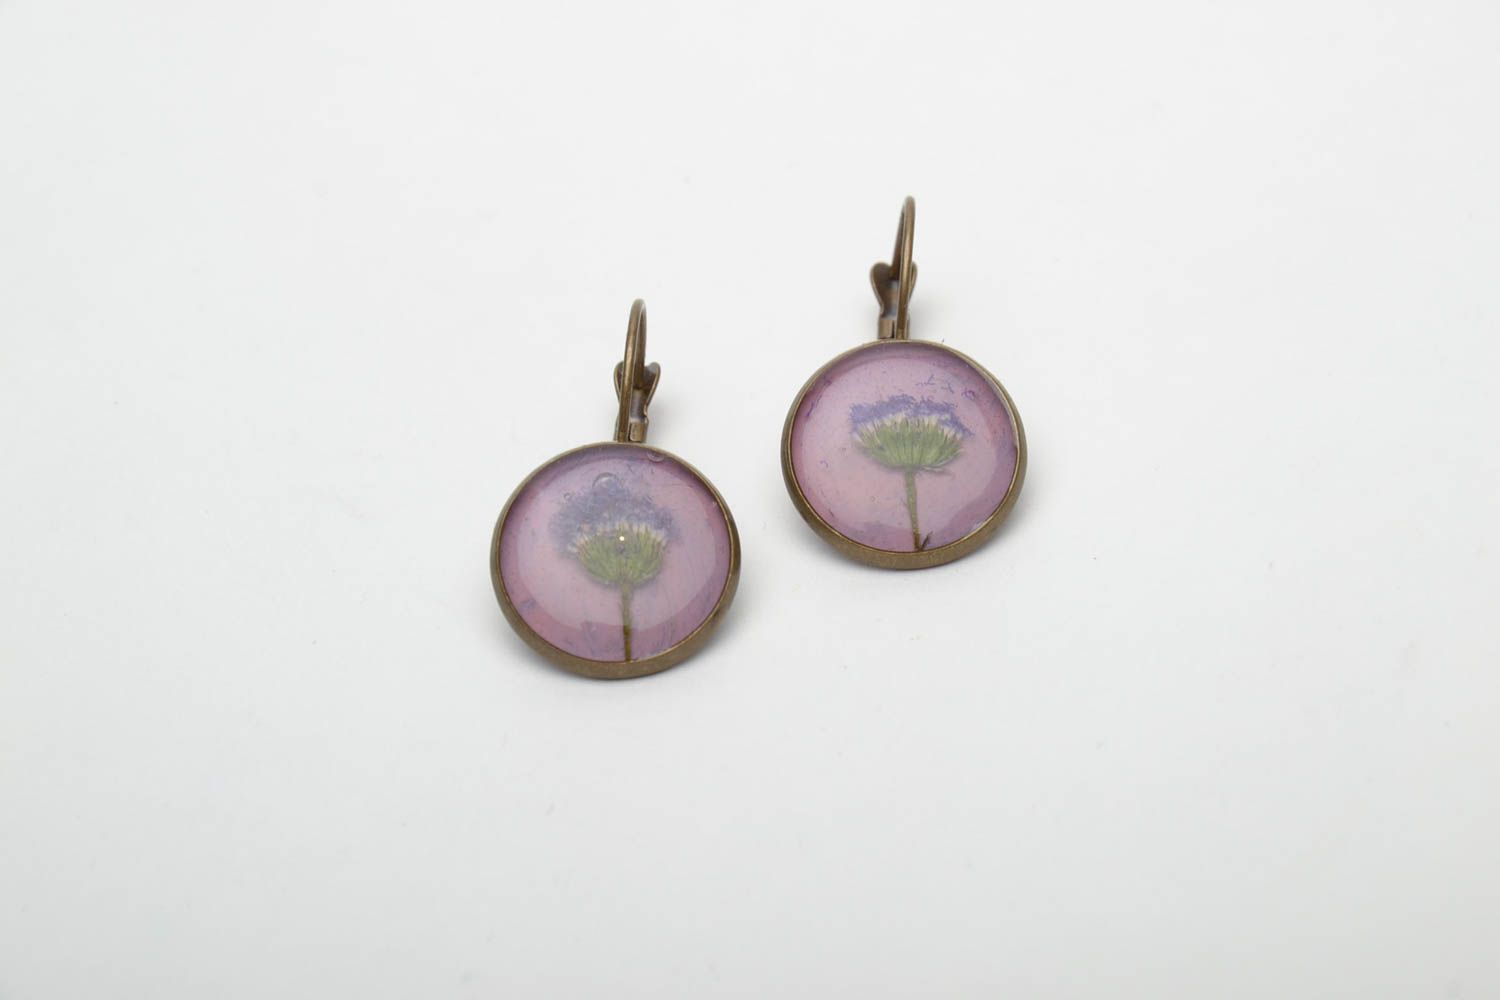 Botanical earrings in vintage style photo 3